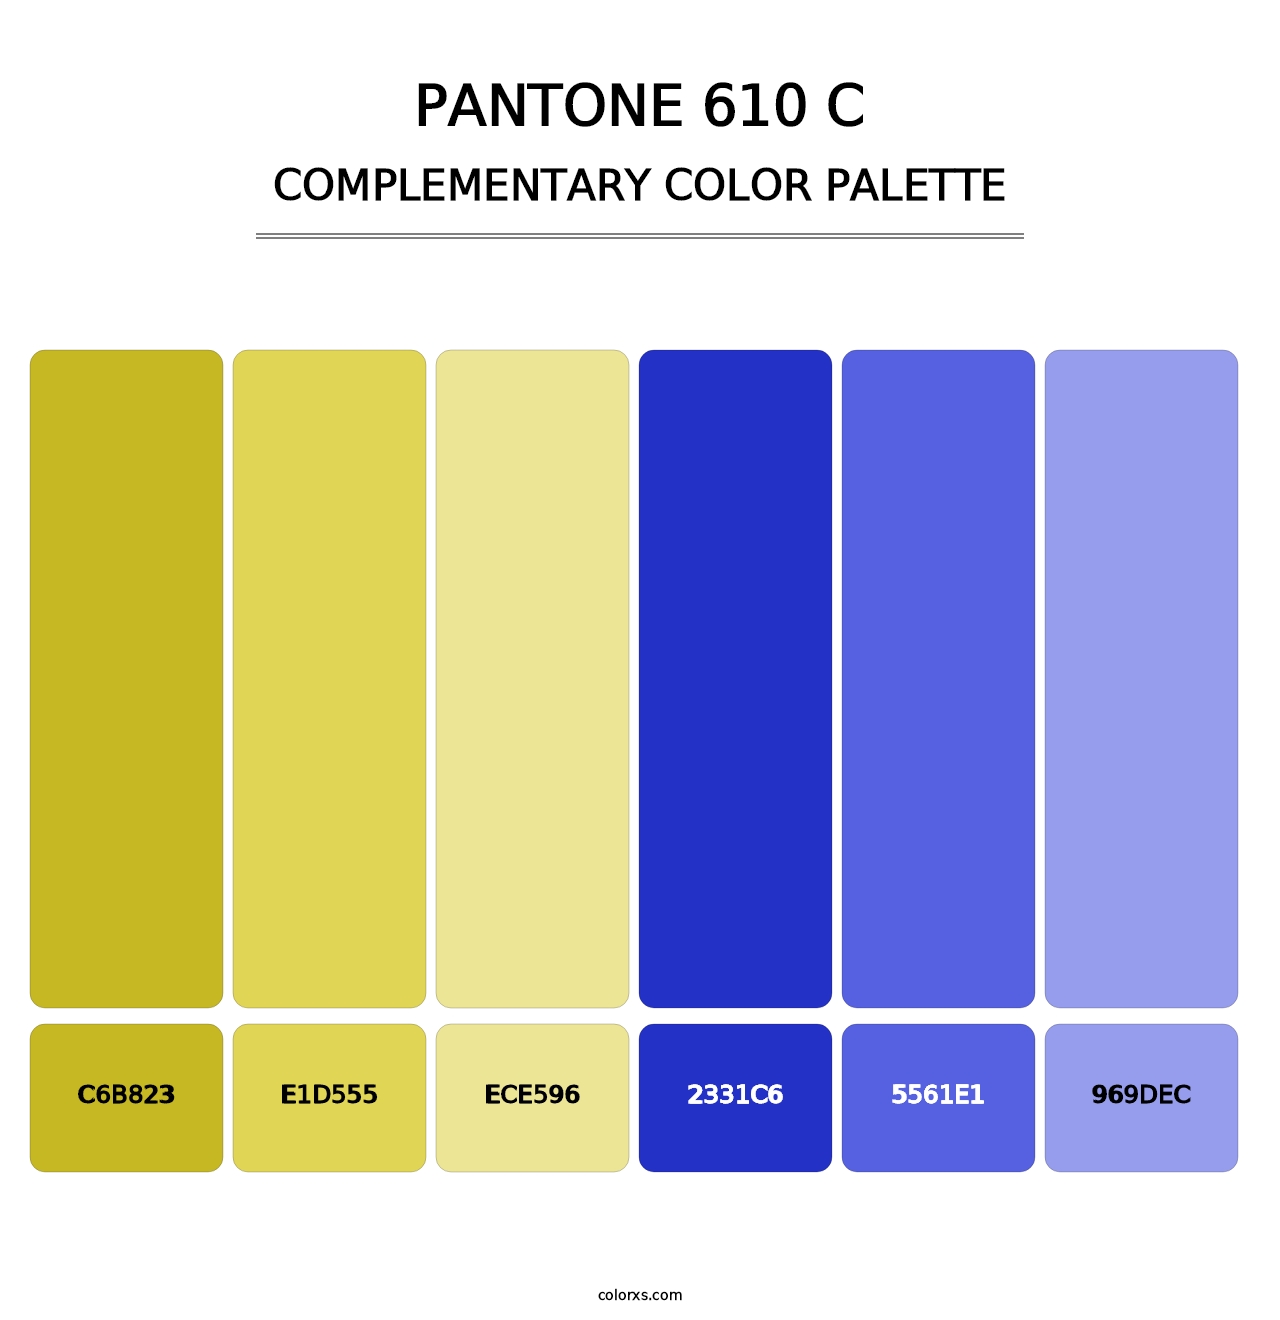 PANTONE 610 C - Complementary Color Palette